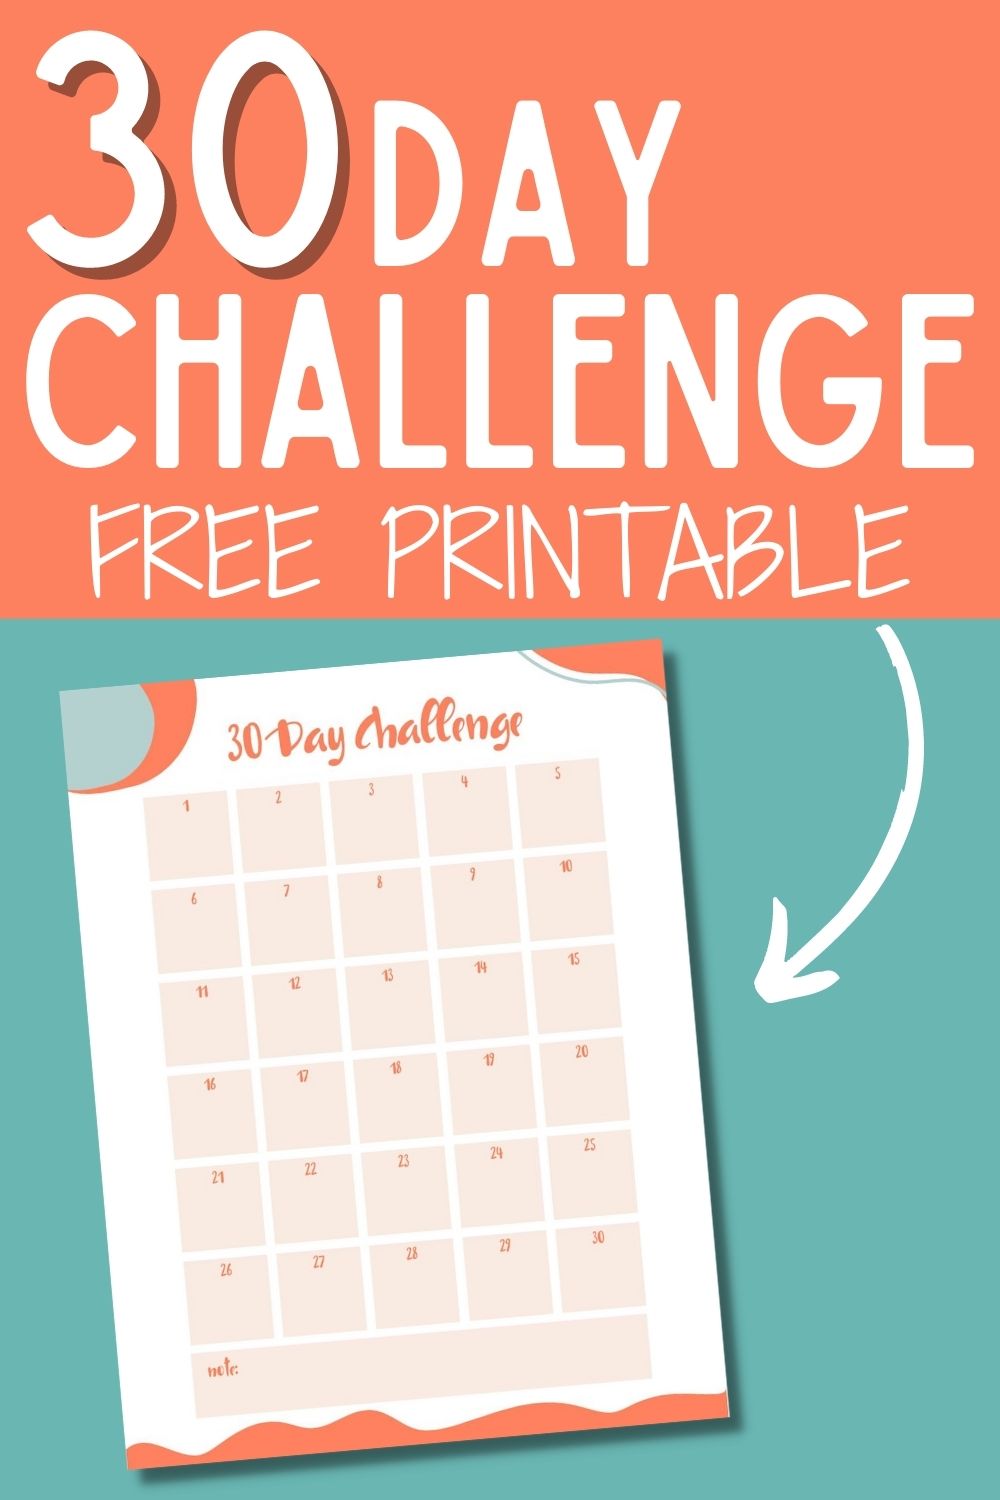 Free Printable 30 Day Challenge Calendar OriginalMOM